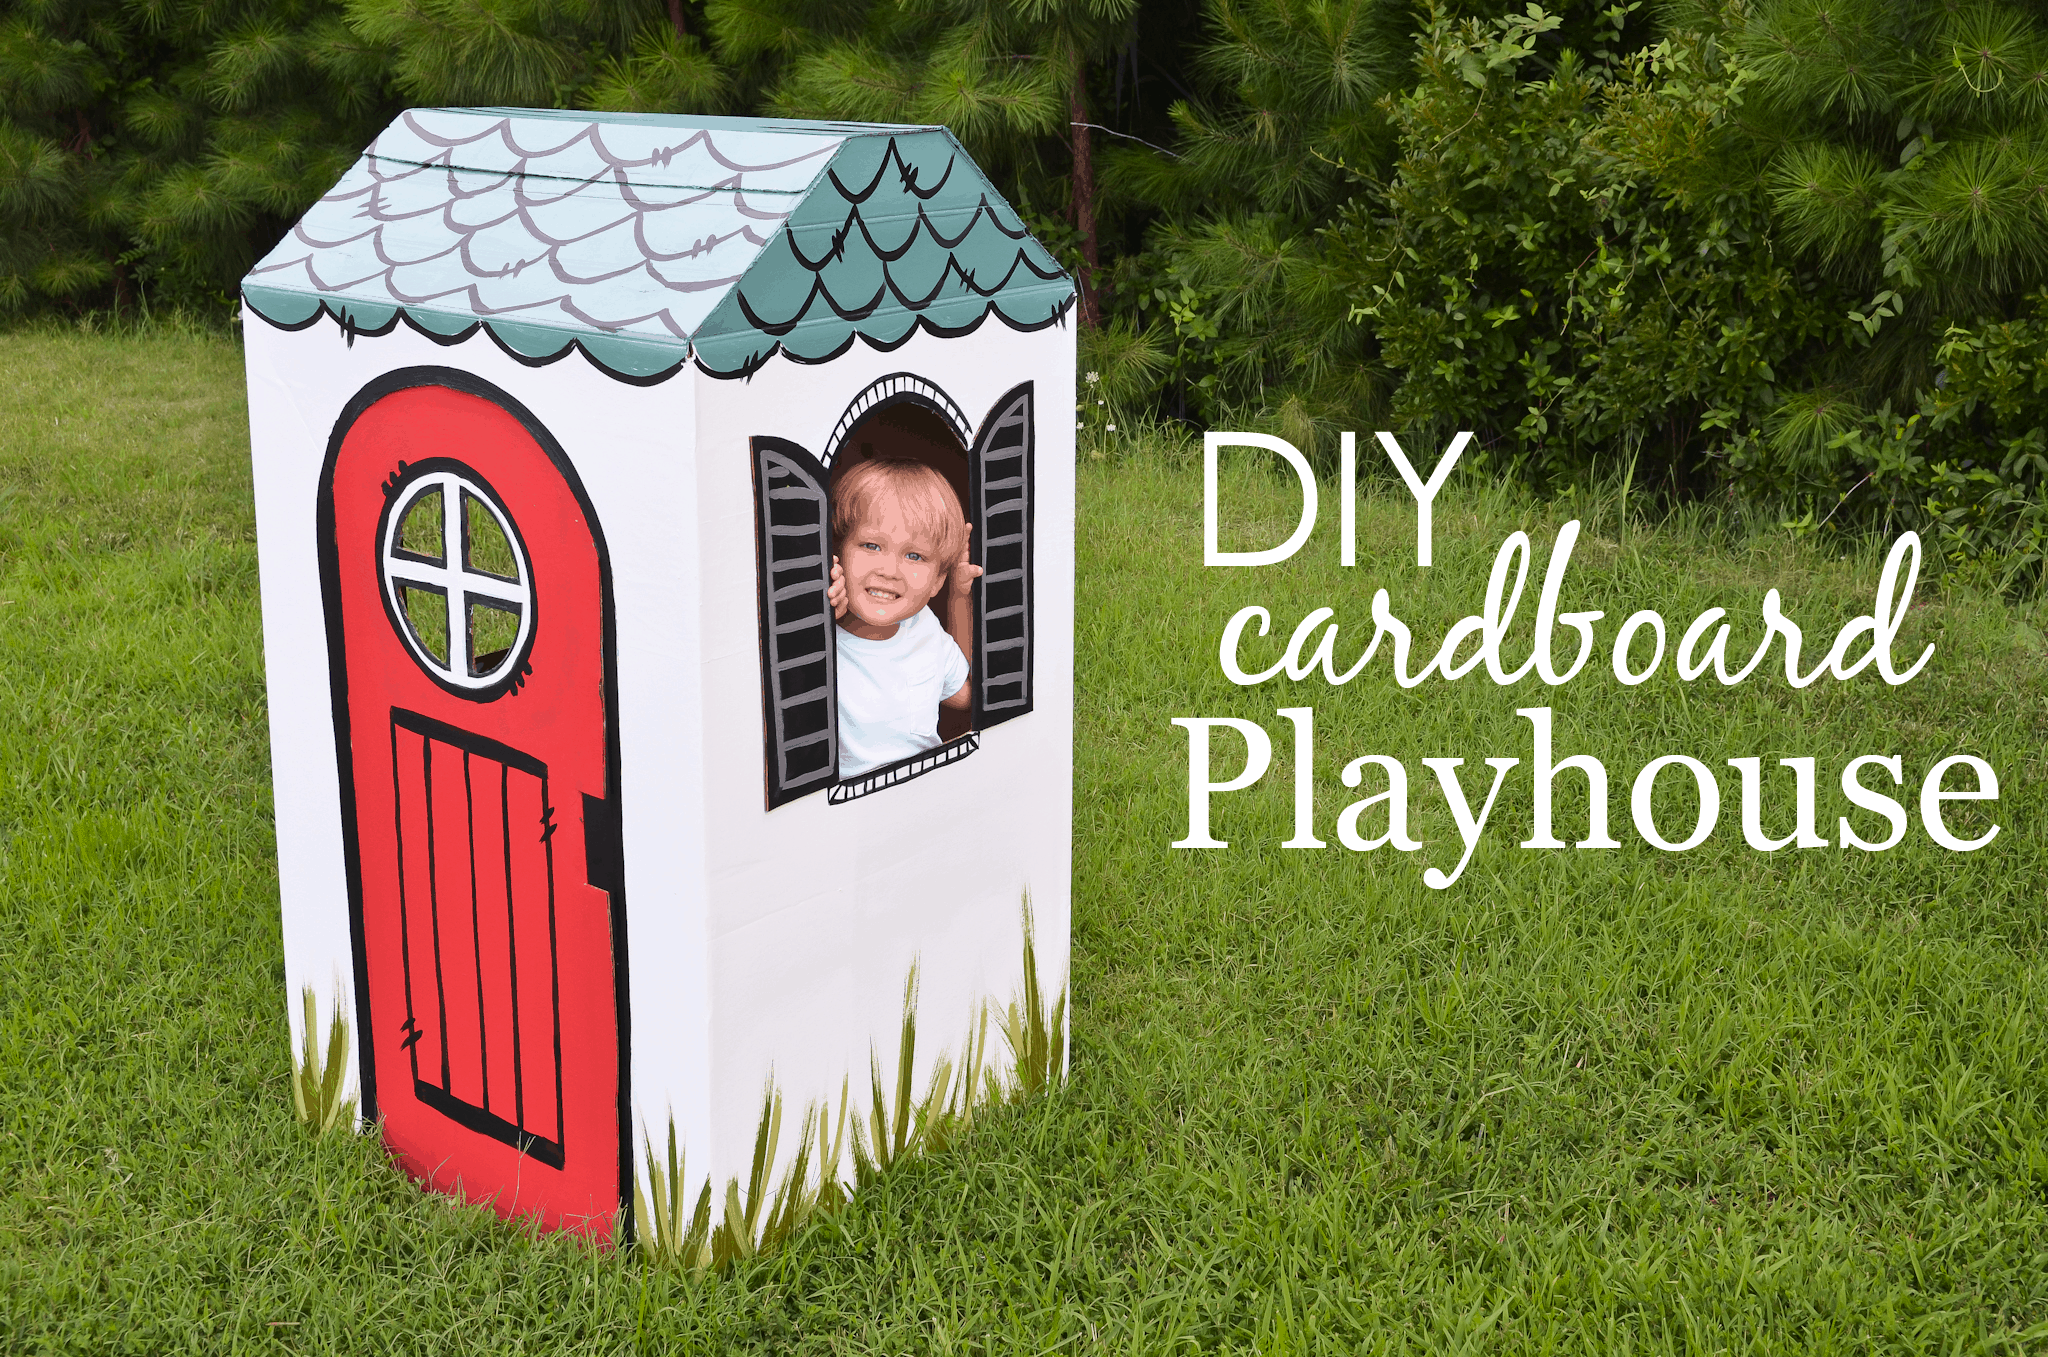 Diy cardboard playhouse